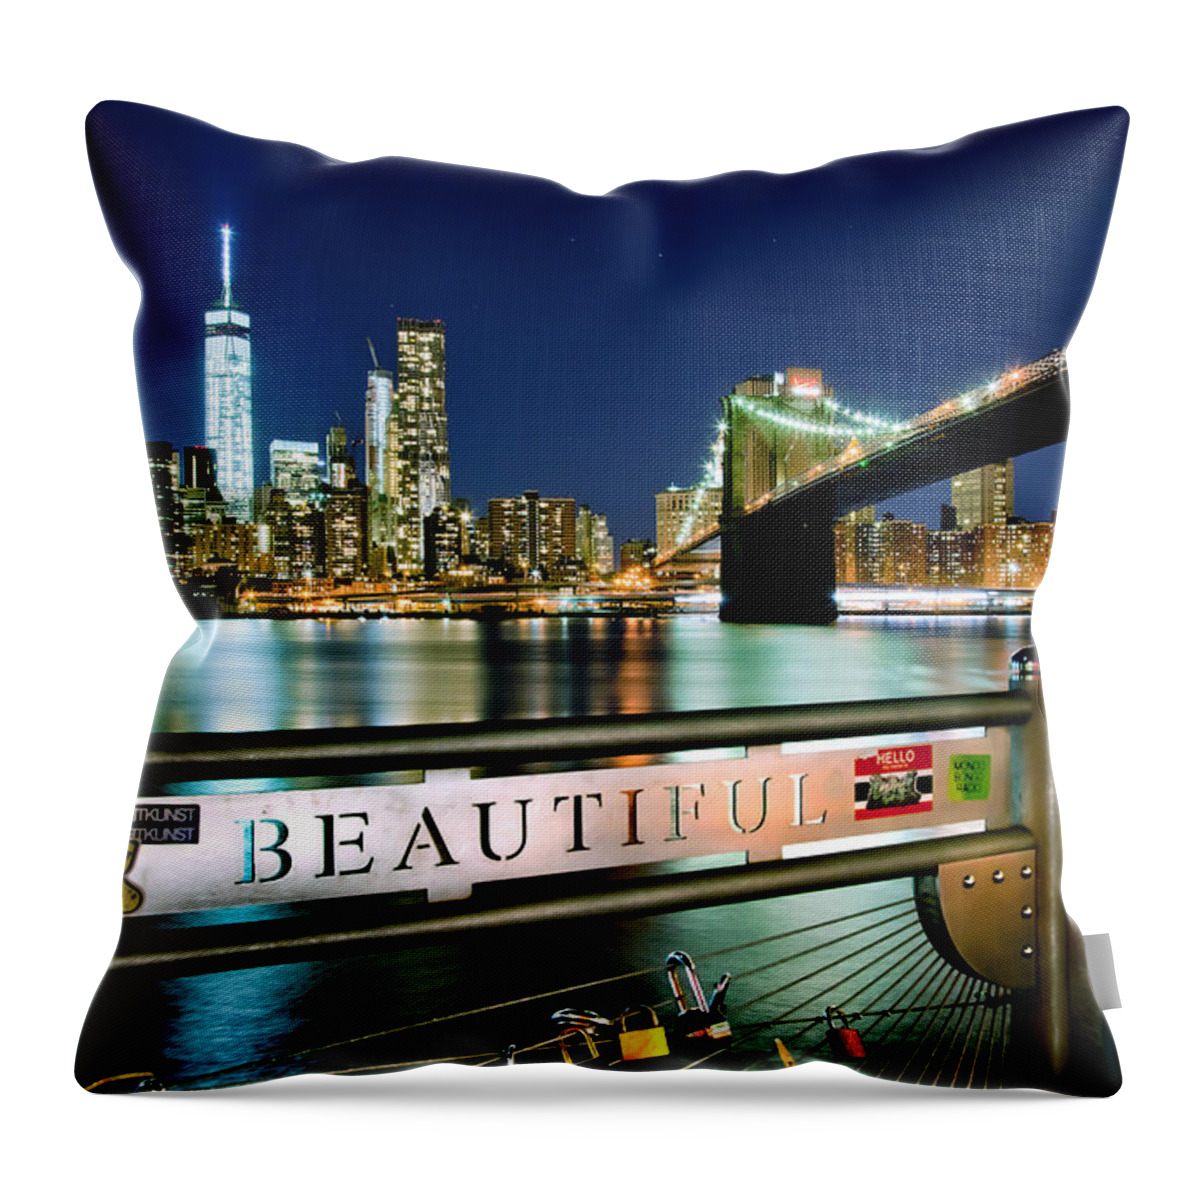 New York City Throw Pillow featuring the photograph Beautiful by Az Jackson